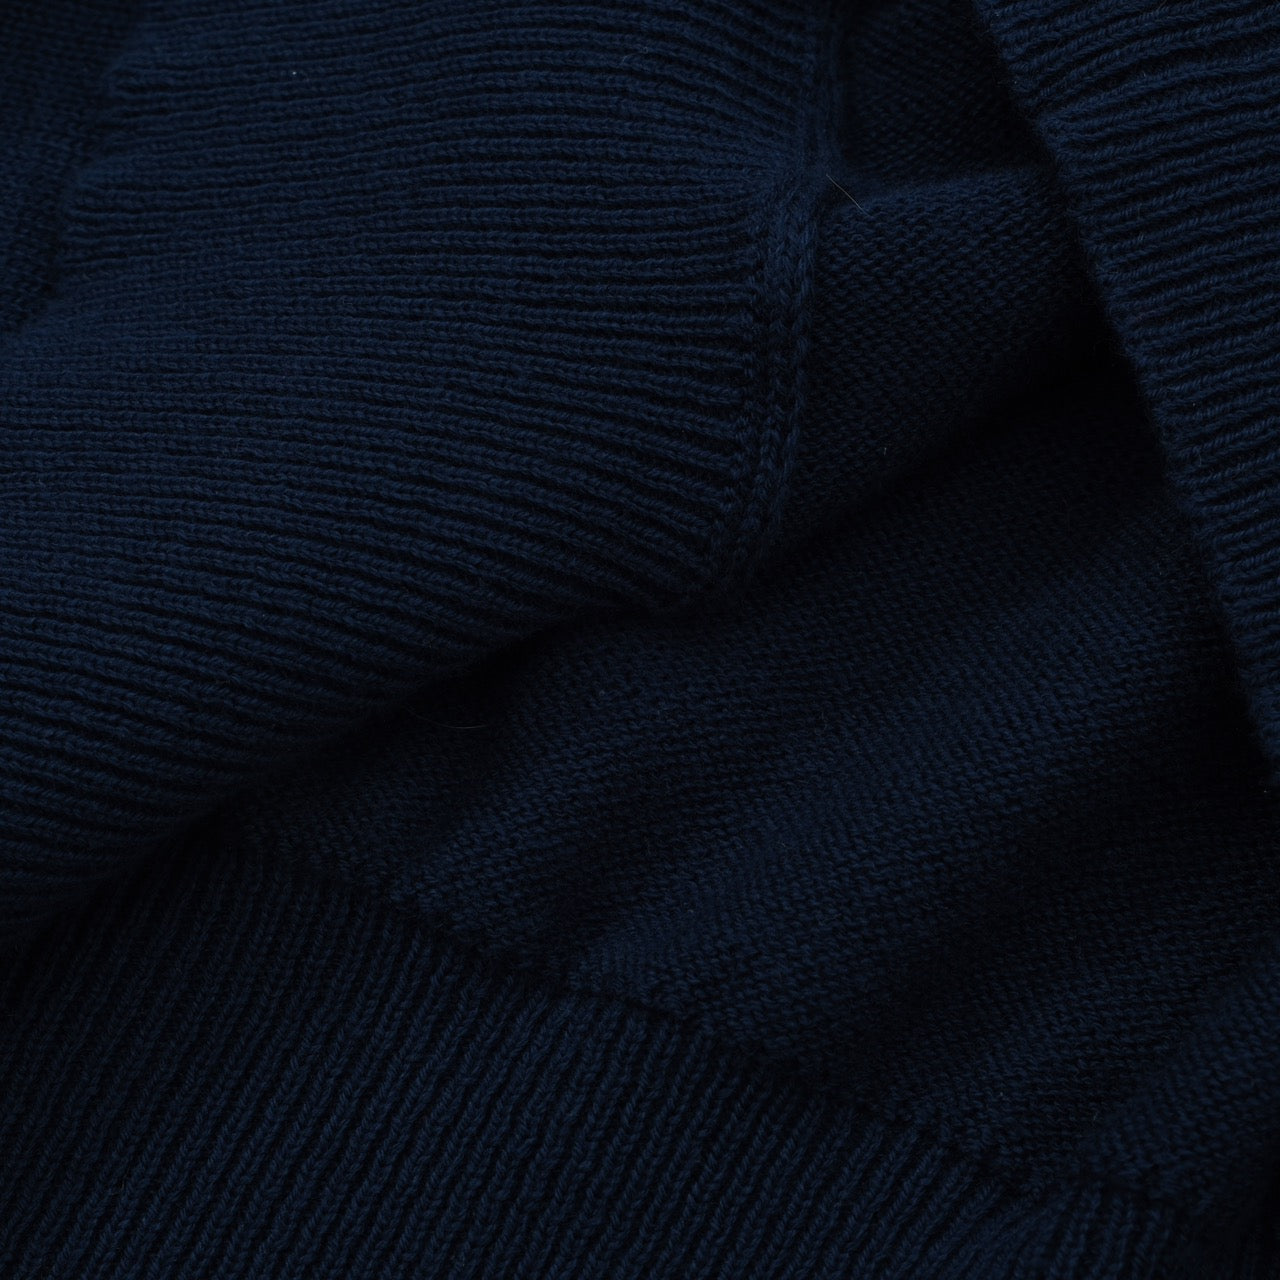 OXKNIT Men Vintage Clothing 1960s Mod Style Racing Stripe Dark Blue Knit Zip Retro Cardigan